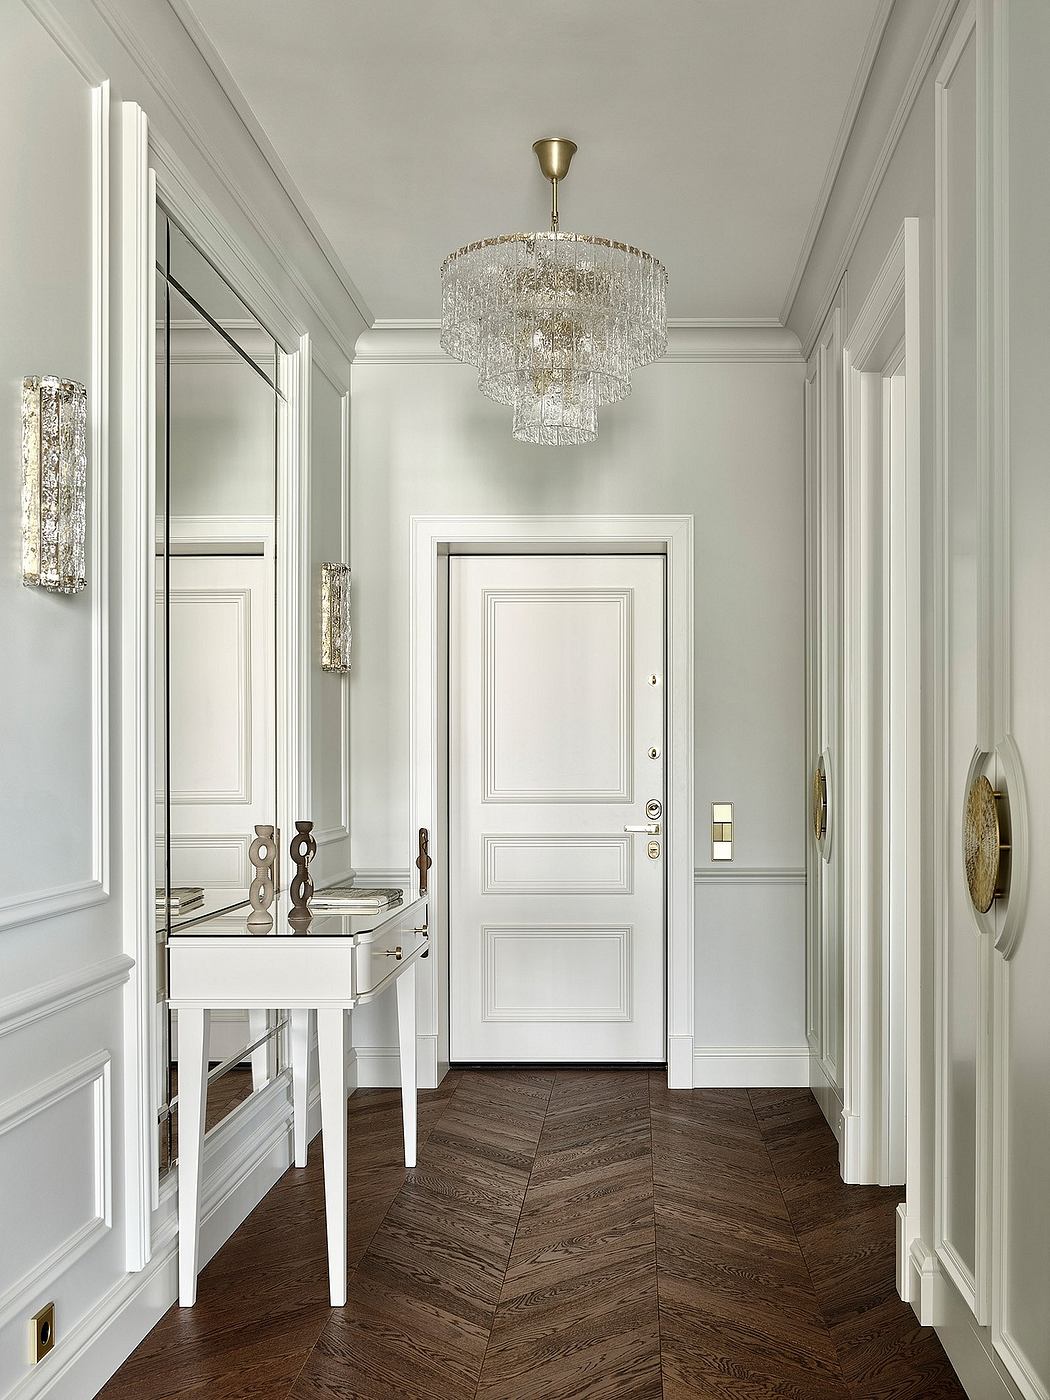 Elegant entryway with a crystal chandelier, herringbone flooring, and decorative moldings.